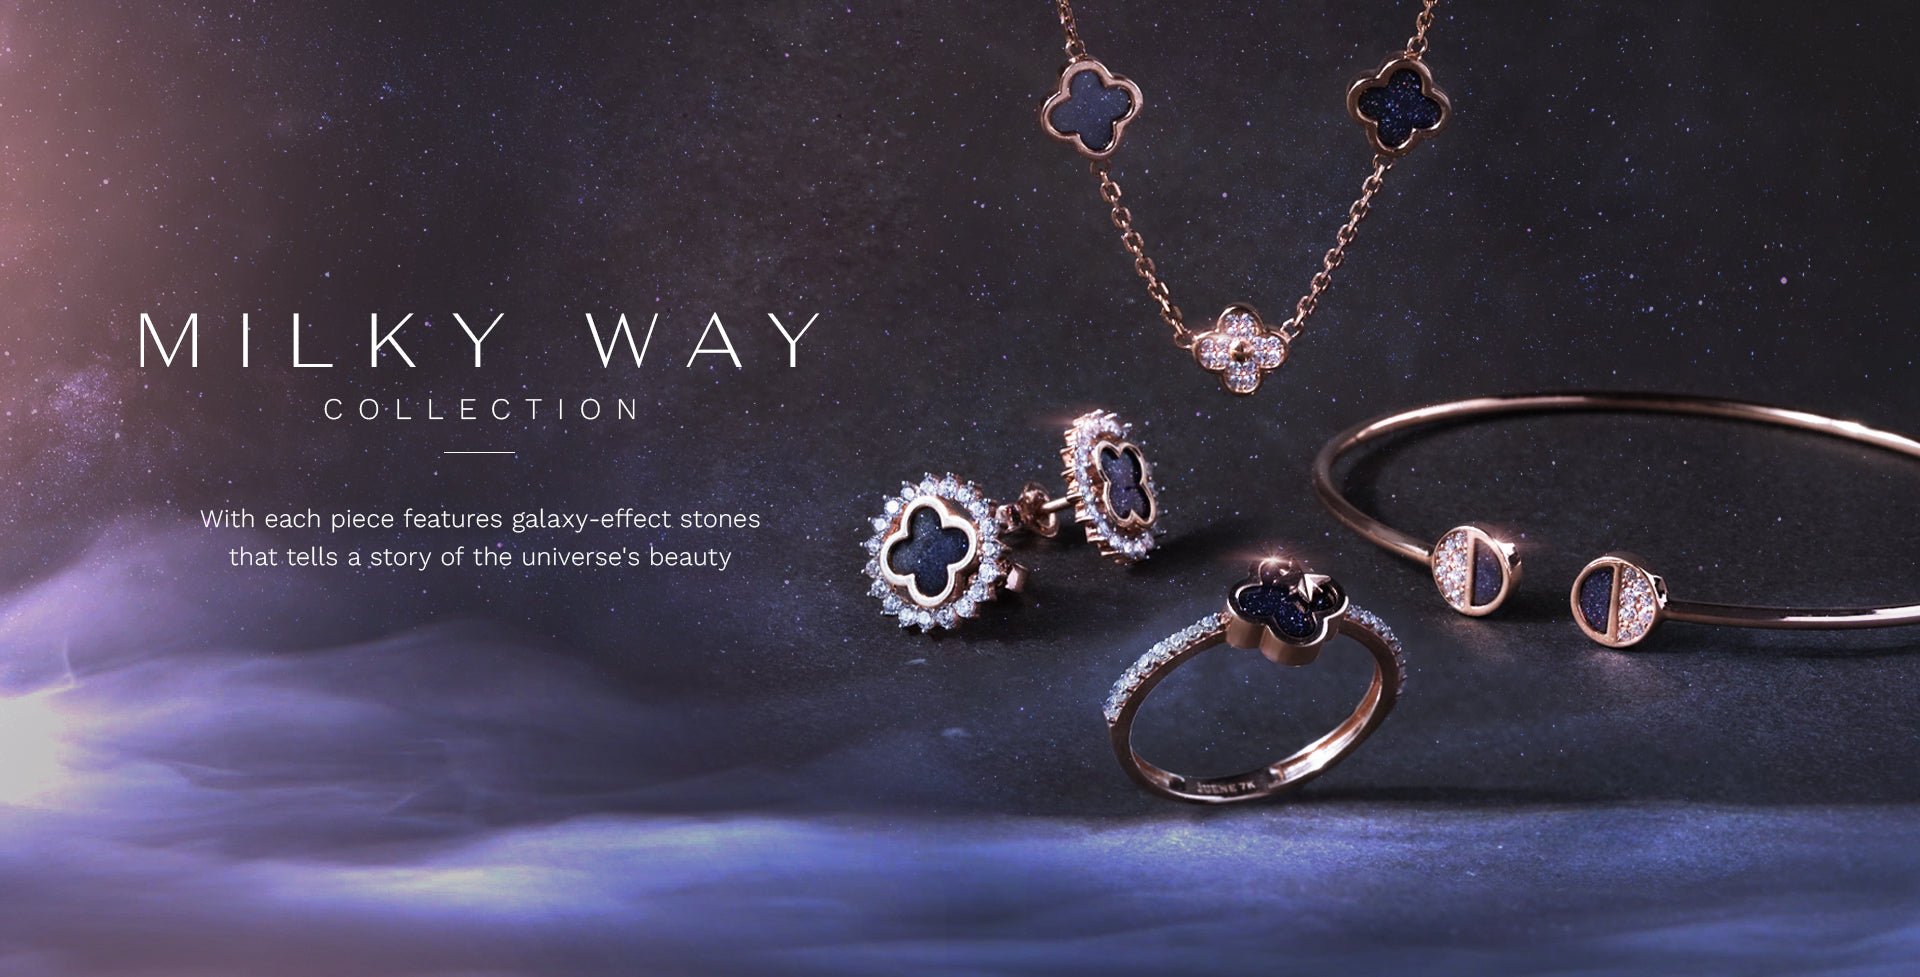 Perhiasan Unik Bertema Galaxy. “Milky Way Collection” - Juene